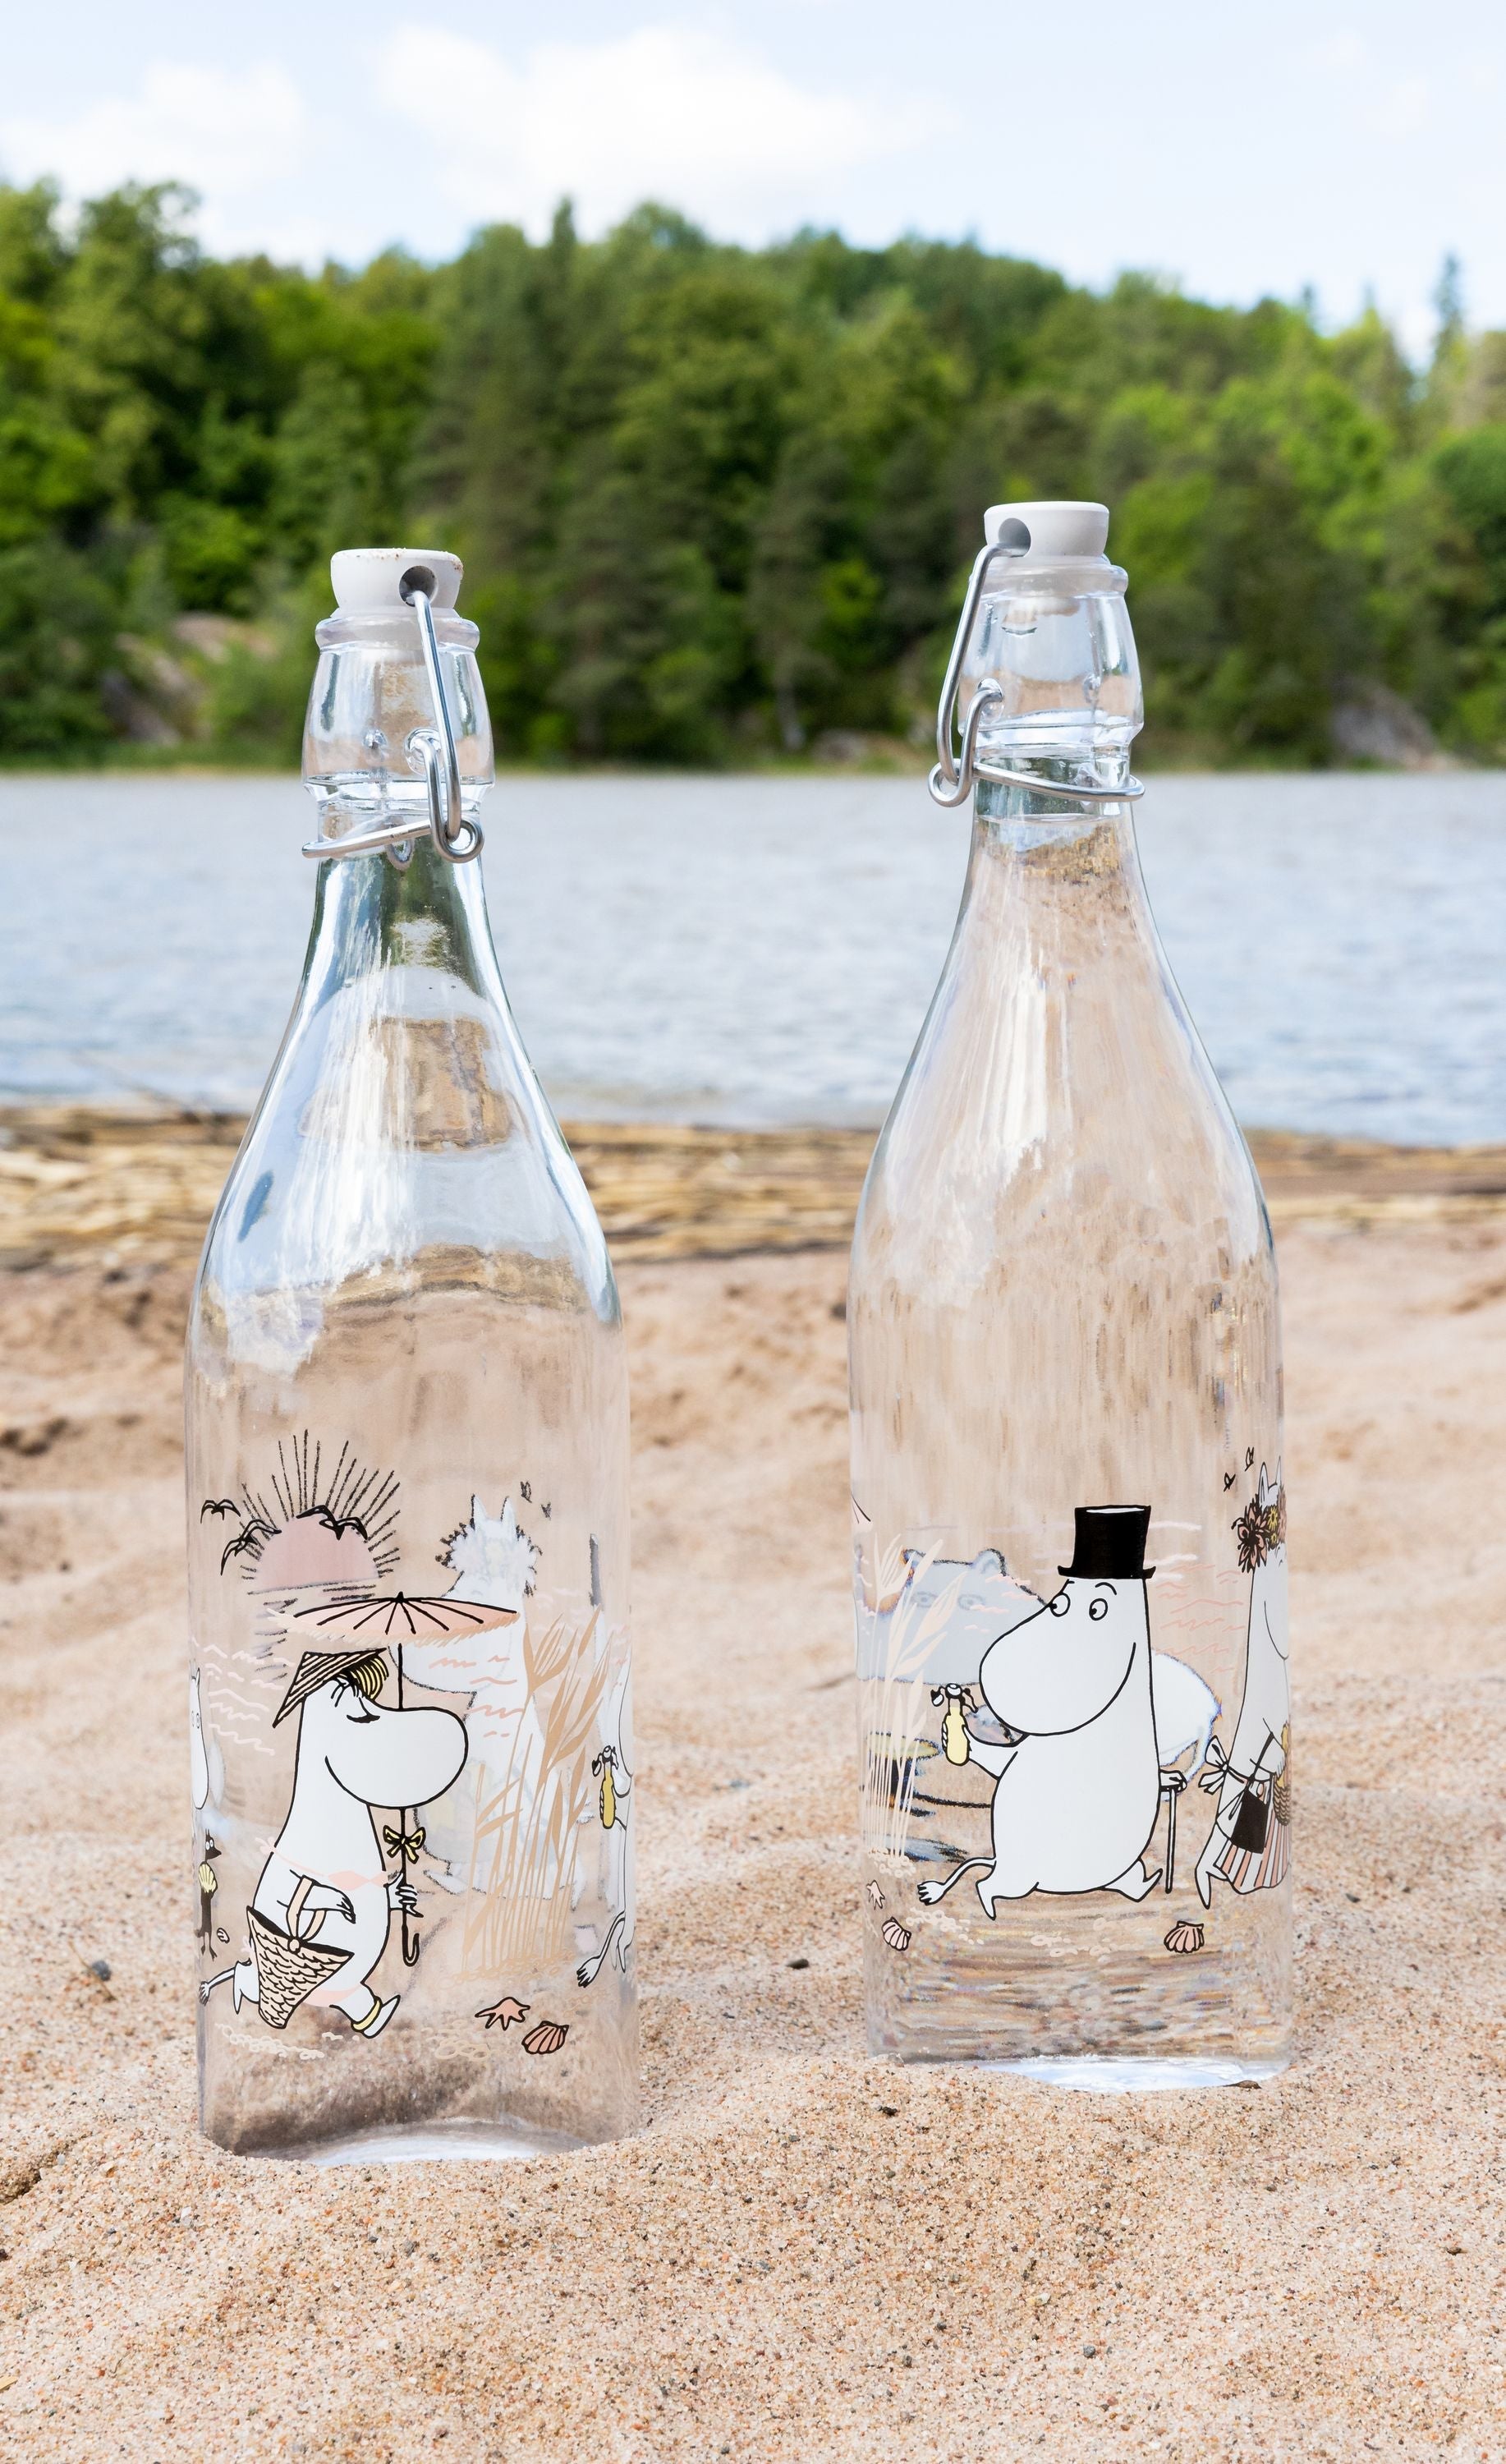 Muurla Moomin Glass Bottle, Fun In The Water